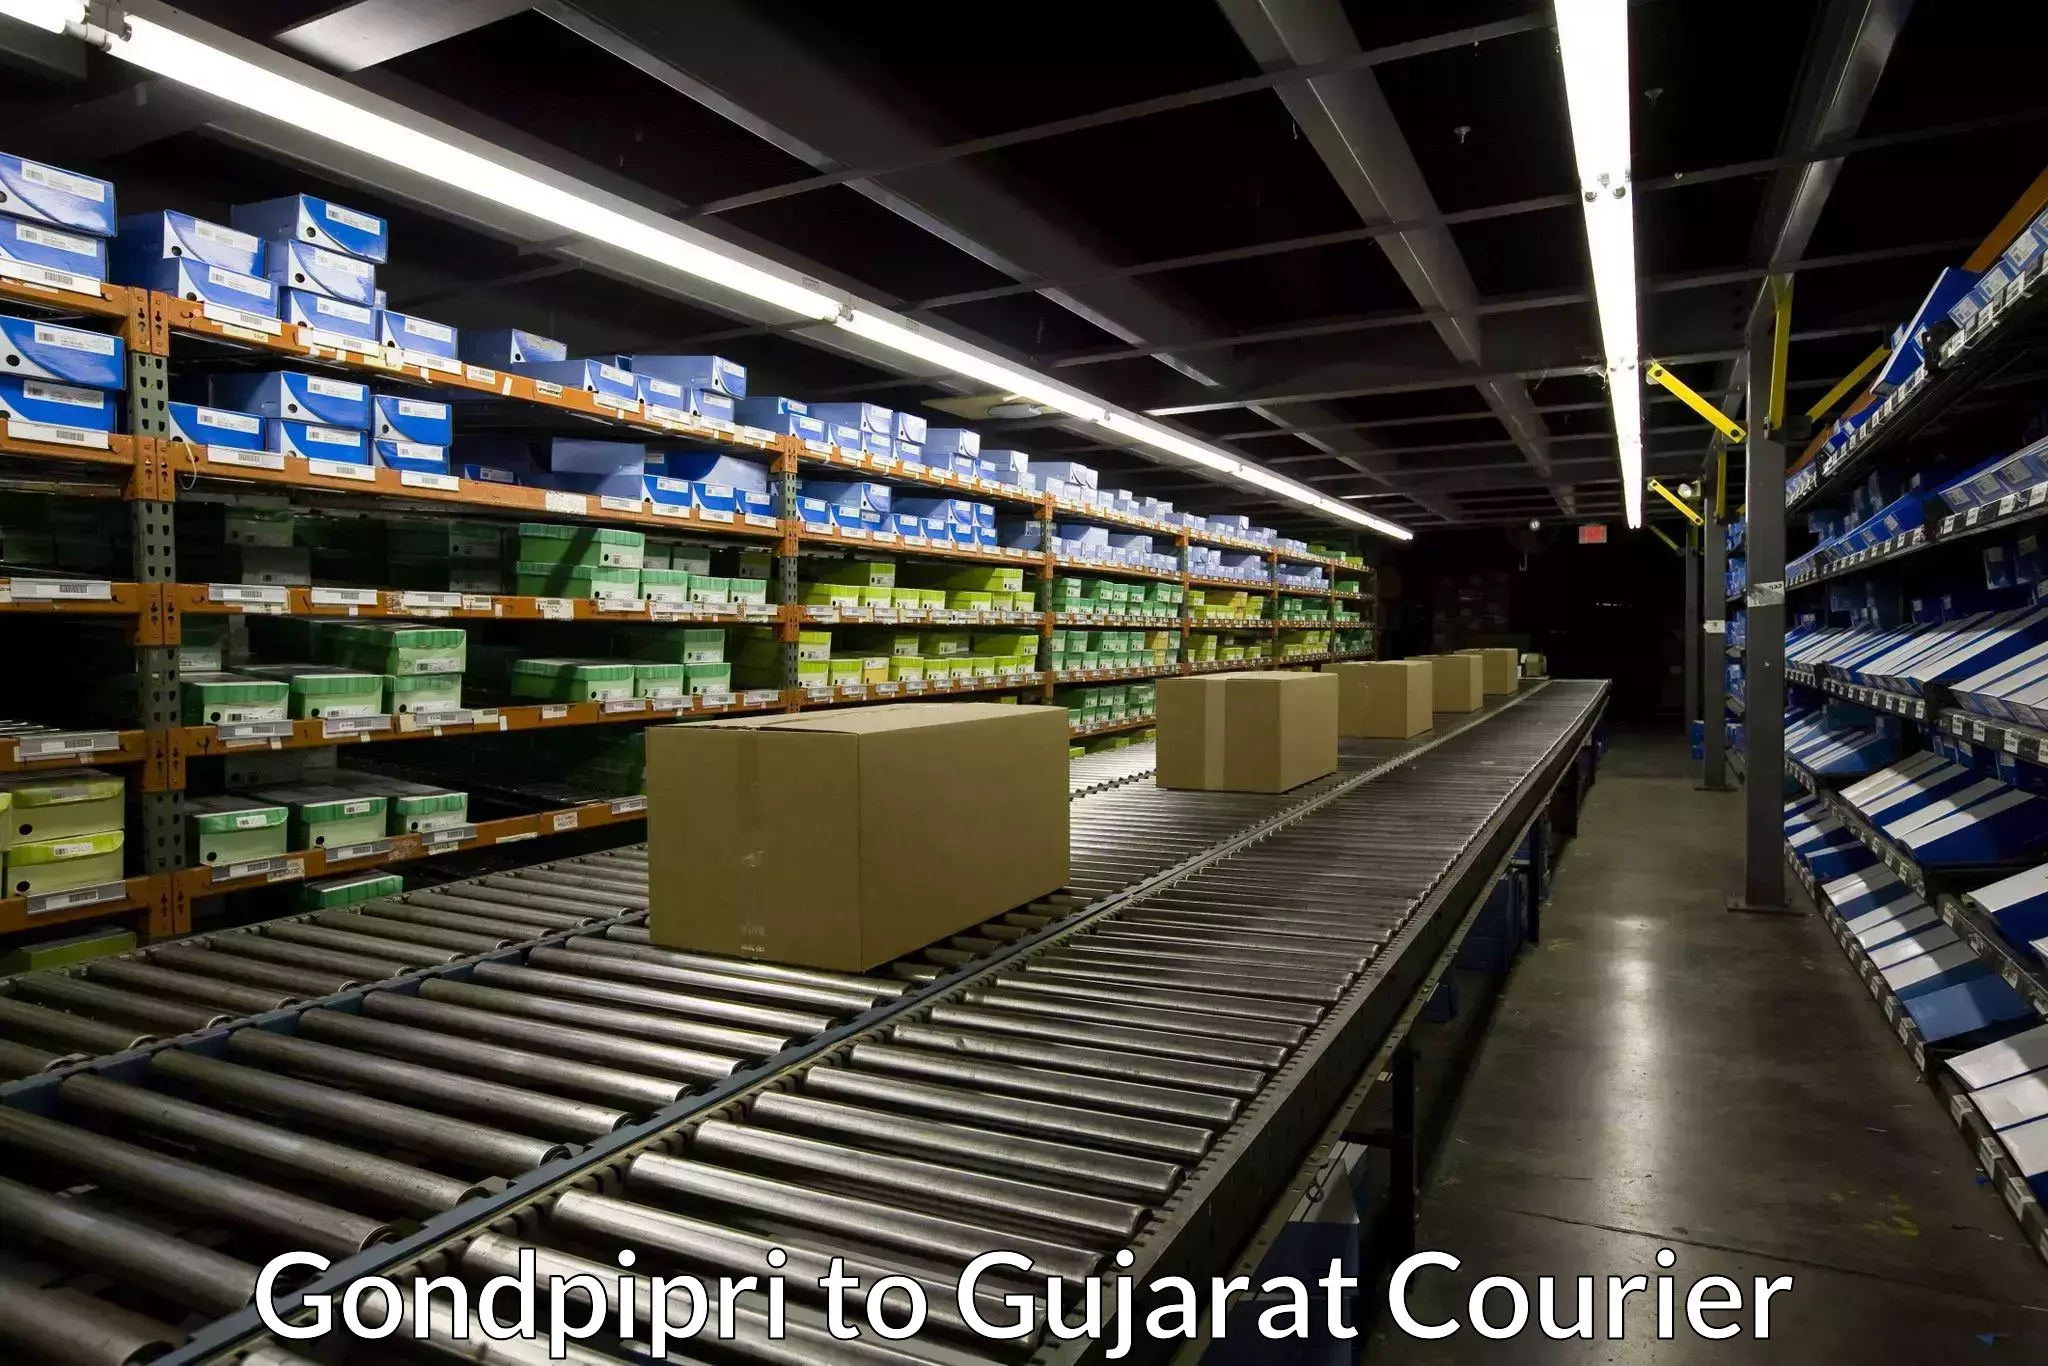 Express delivery capabilities Gondpipri to Gujarat